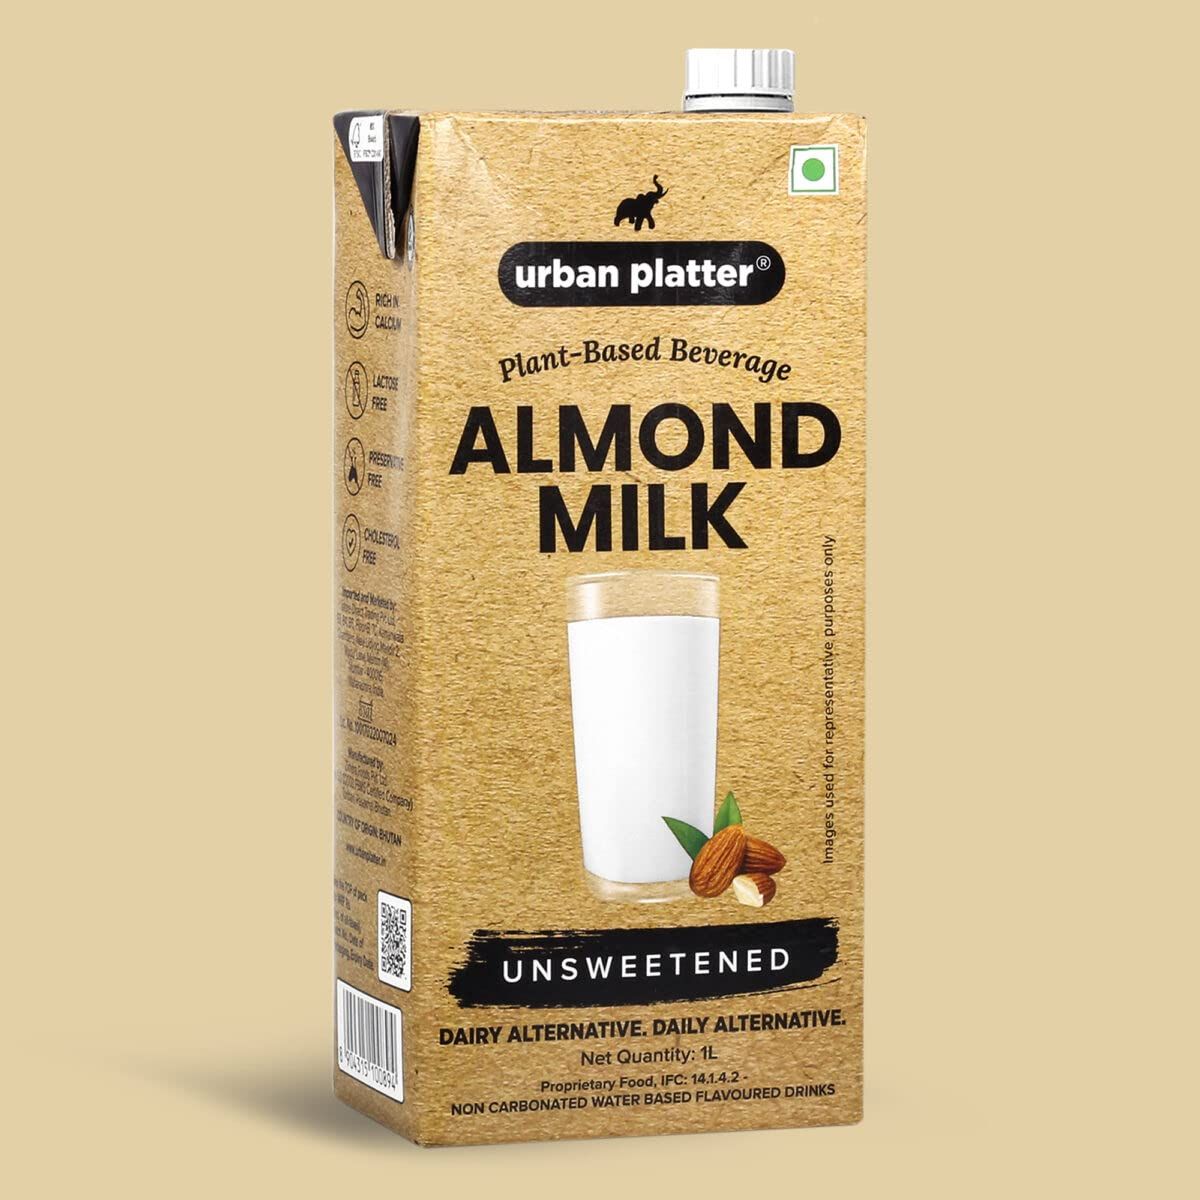 Urban Platter Unsweetened Almond Milk Image